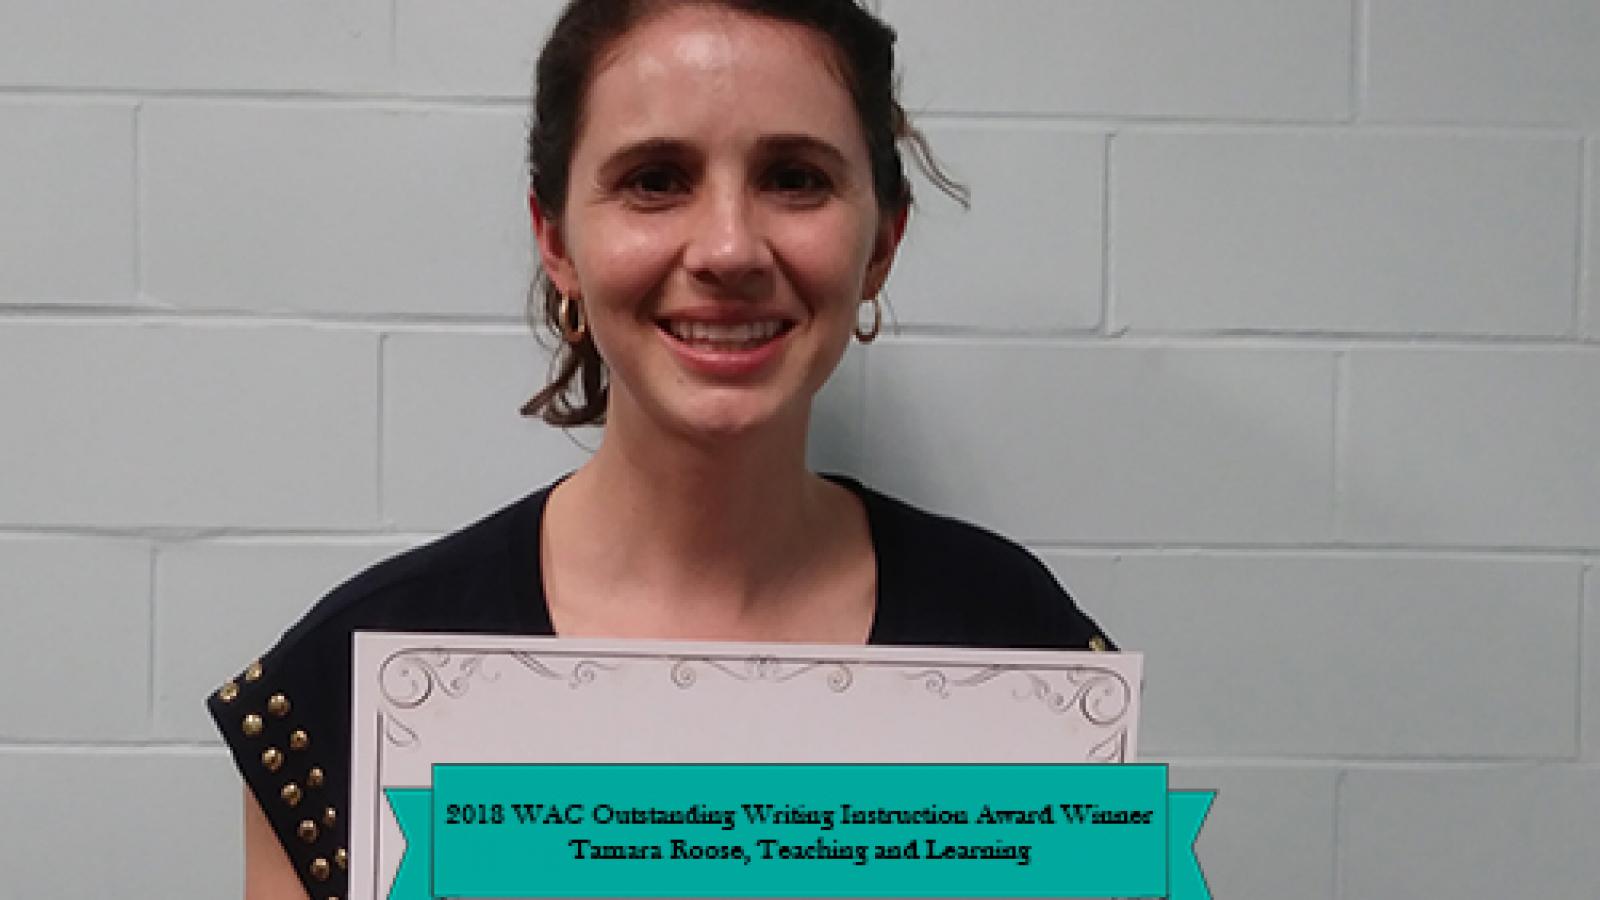 2018 WAC Outstanding Writing Instruction Award Winner, Tamara Roose